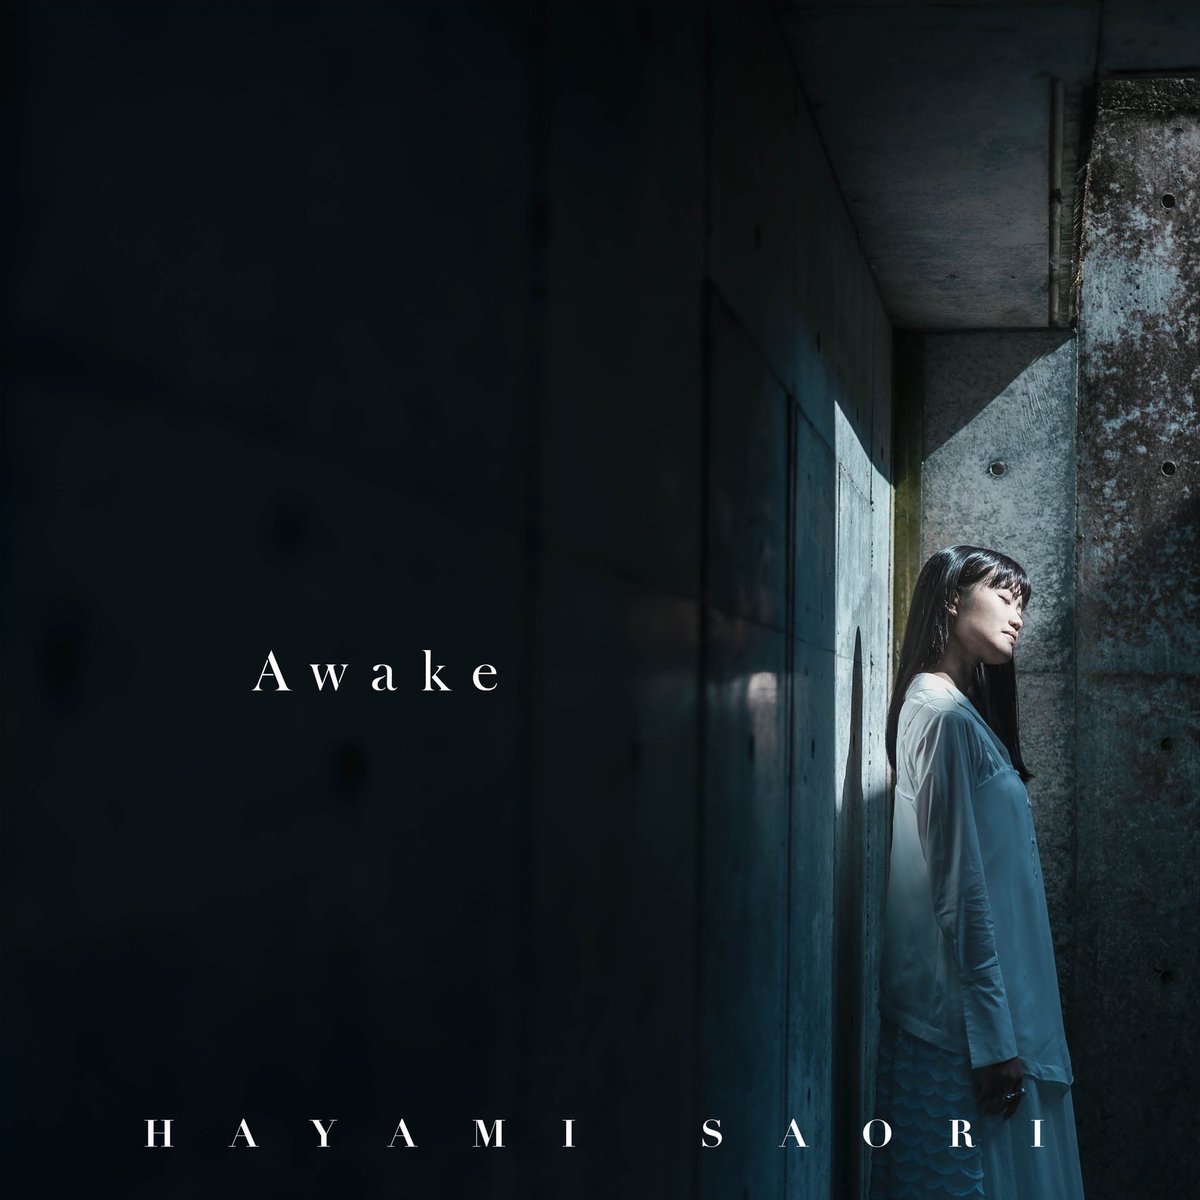 Cover art for『Saori Hayami - Awake』from the release『Awake』